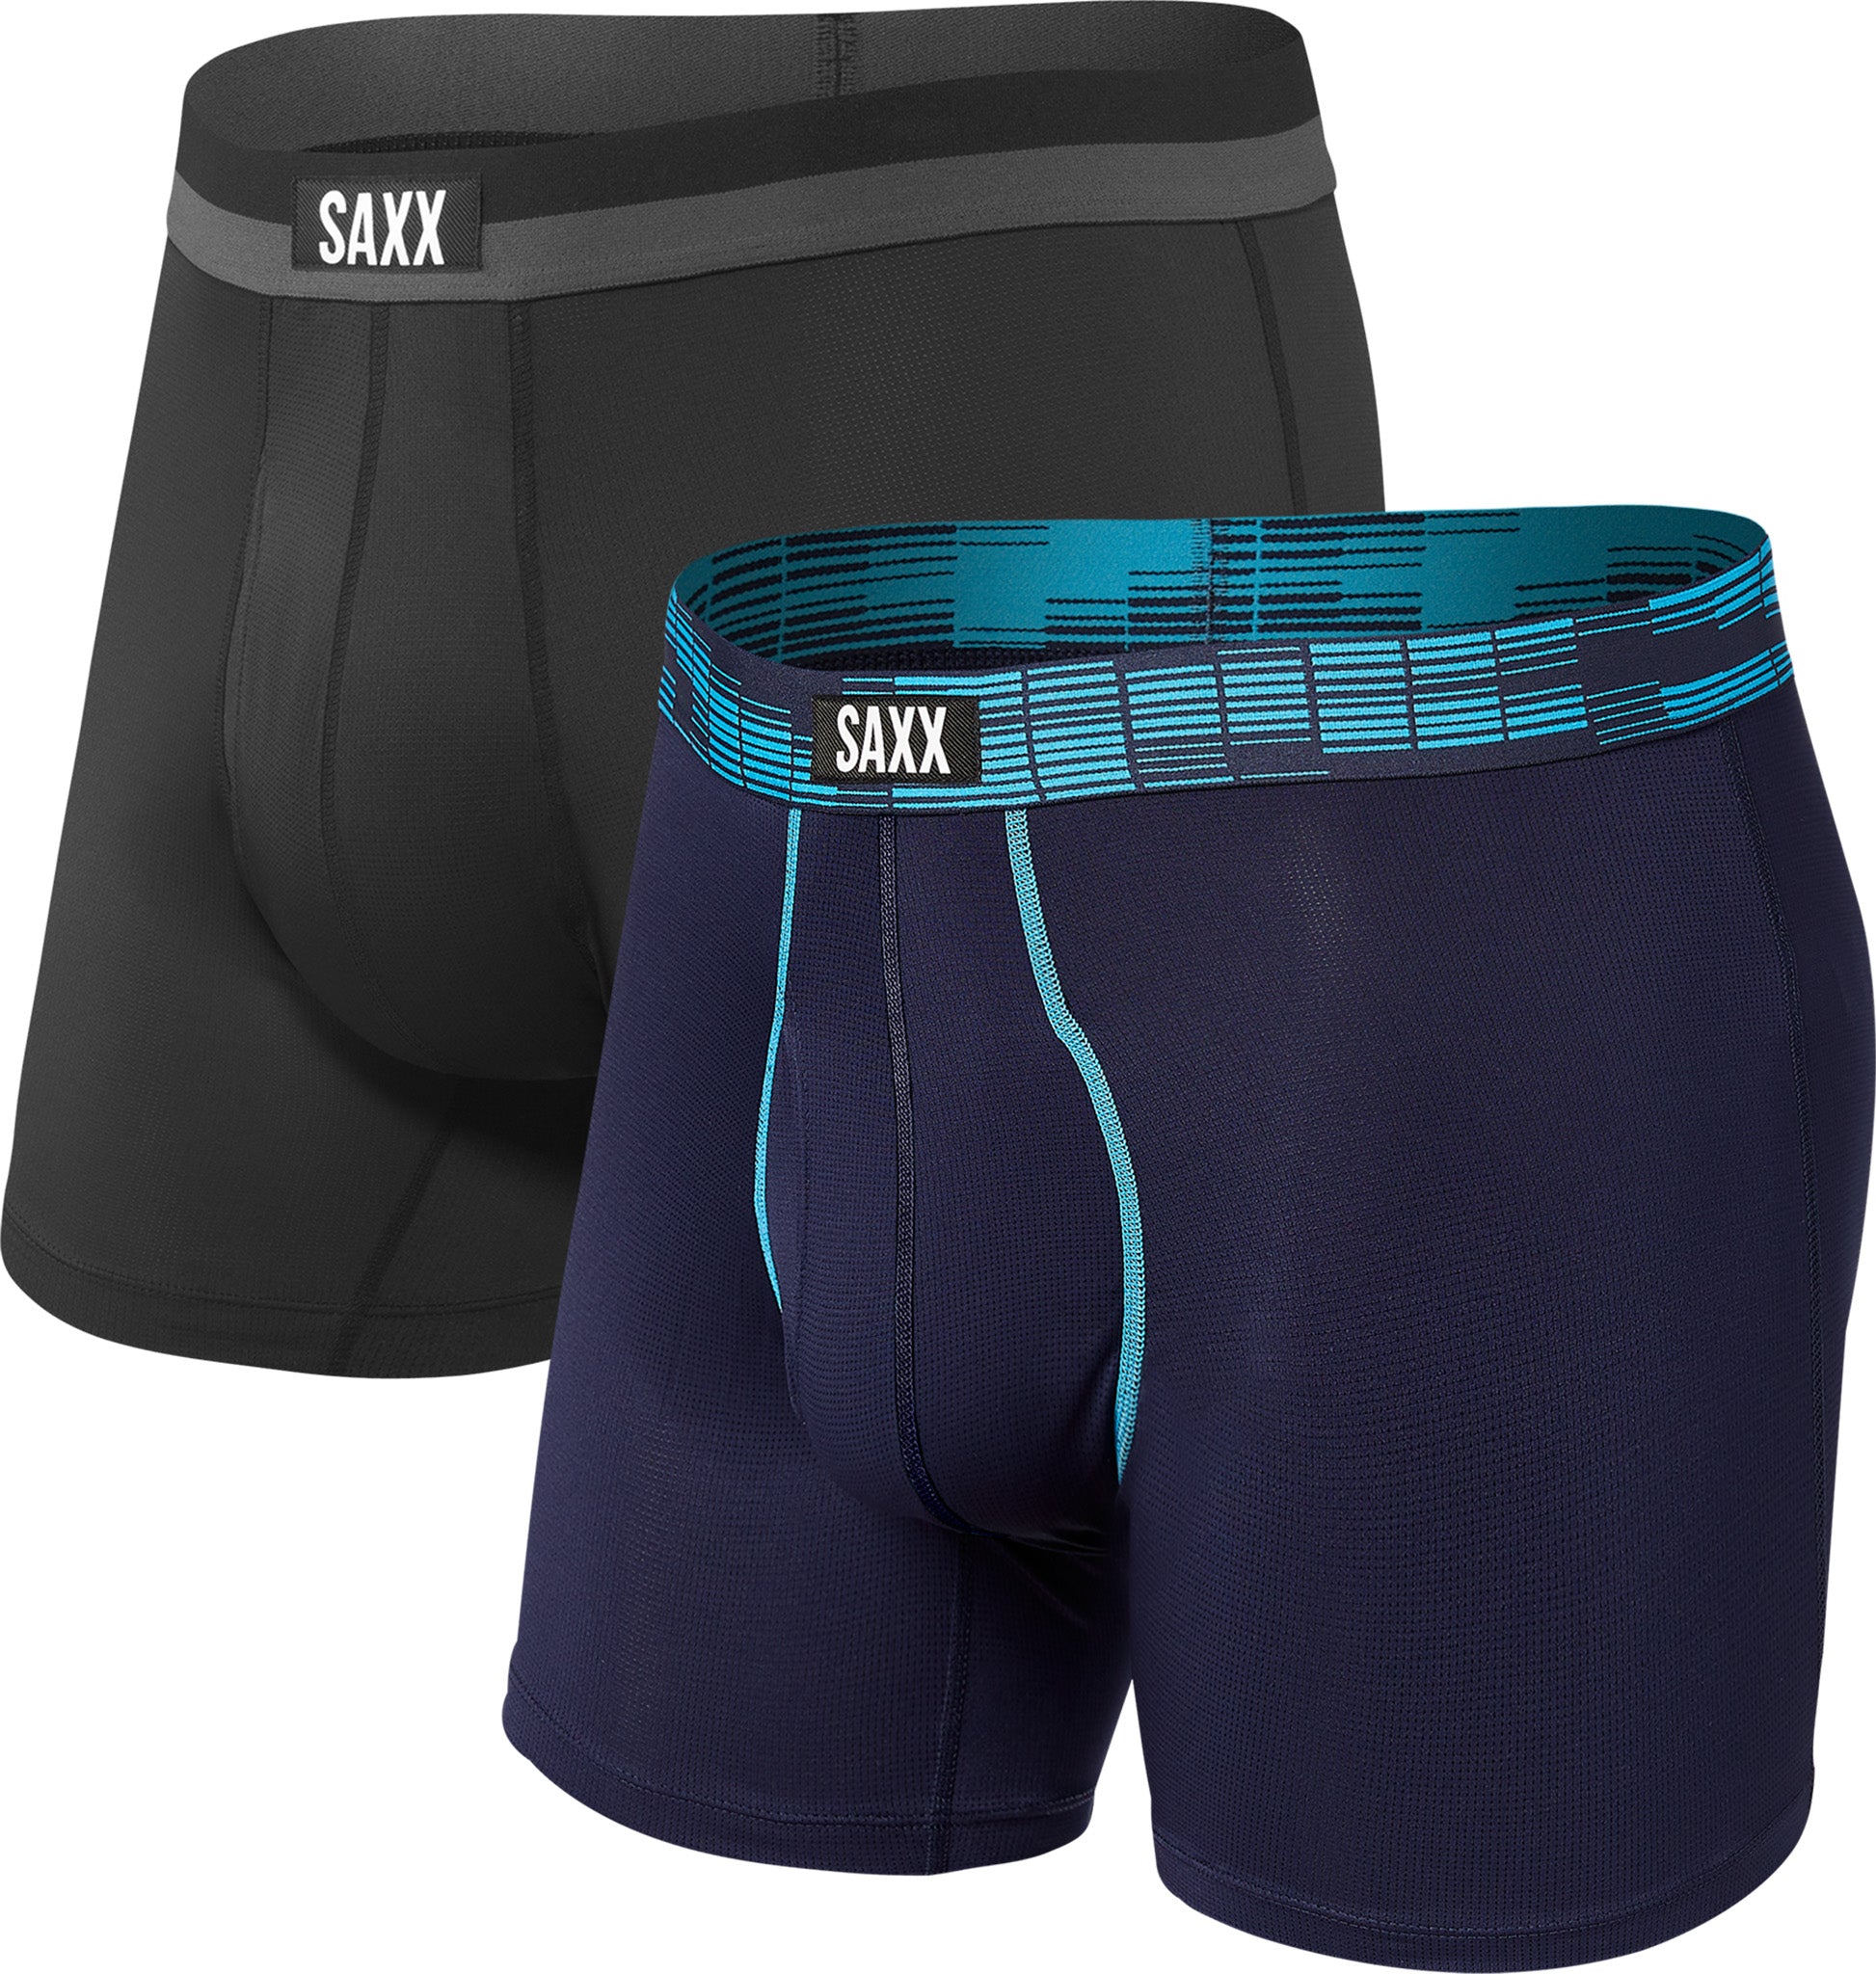 panties for women Men's y Underwear Breathable Mesh Underwear Middle Waist  Men Leisure Sports